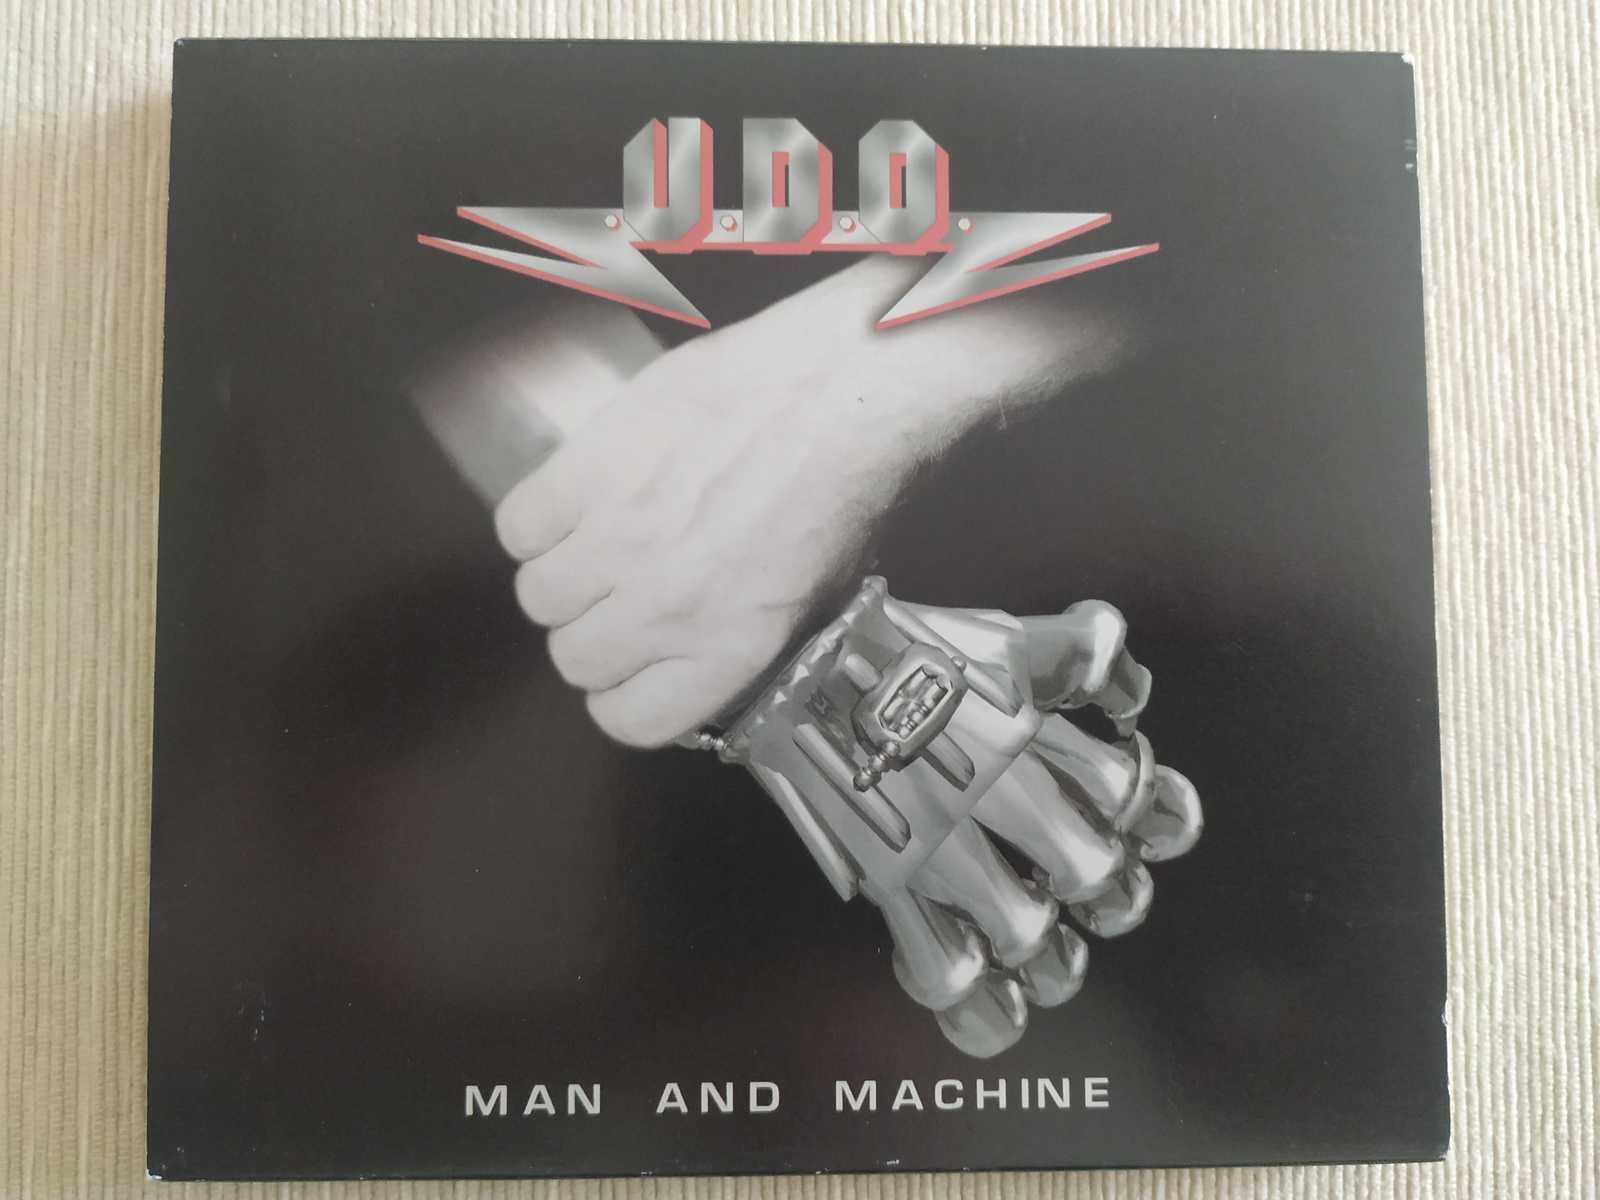 U.D.O - Man And Machine (2002) (Japan) 1st Press